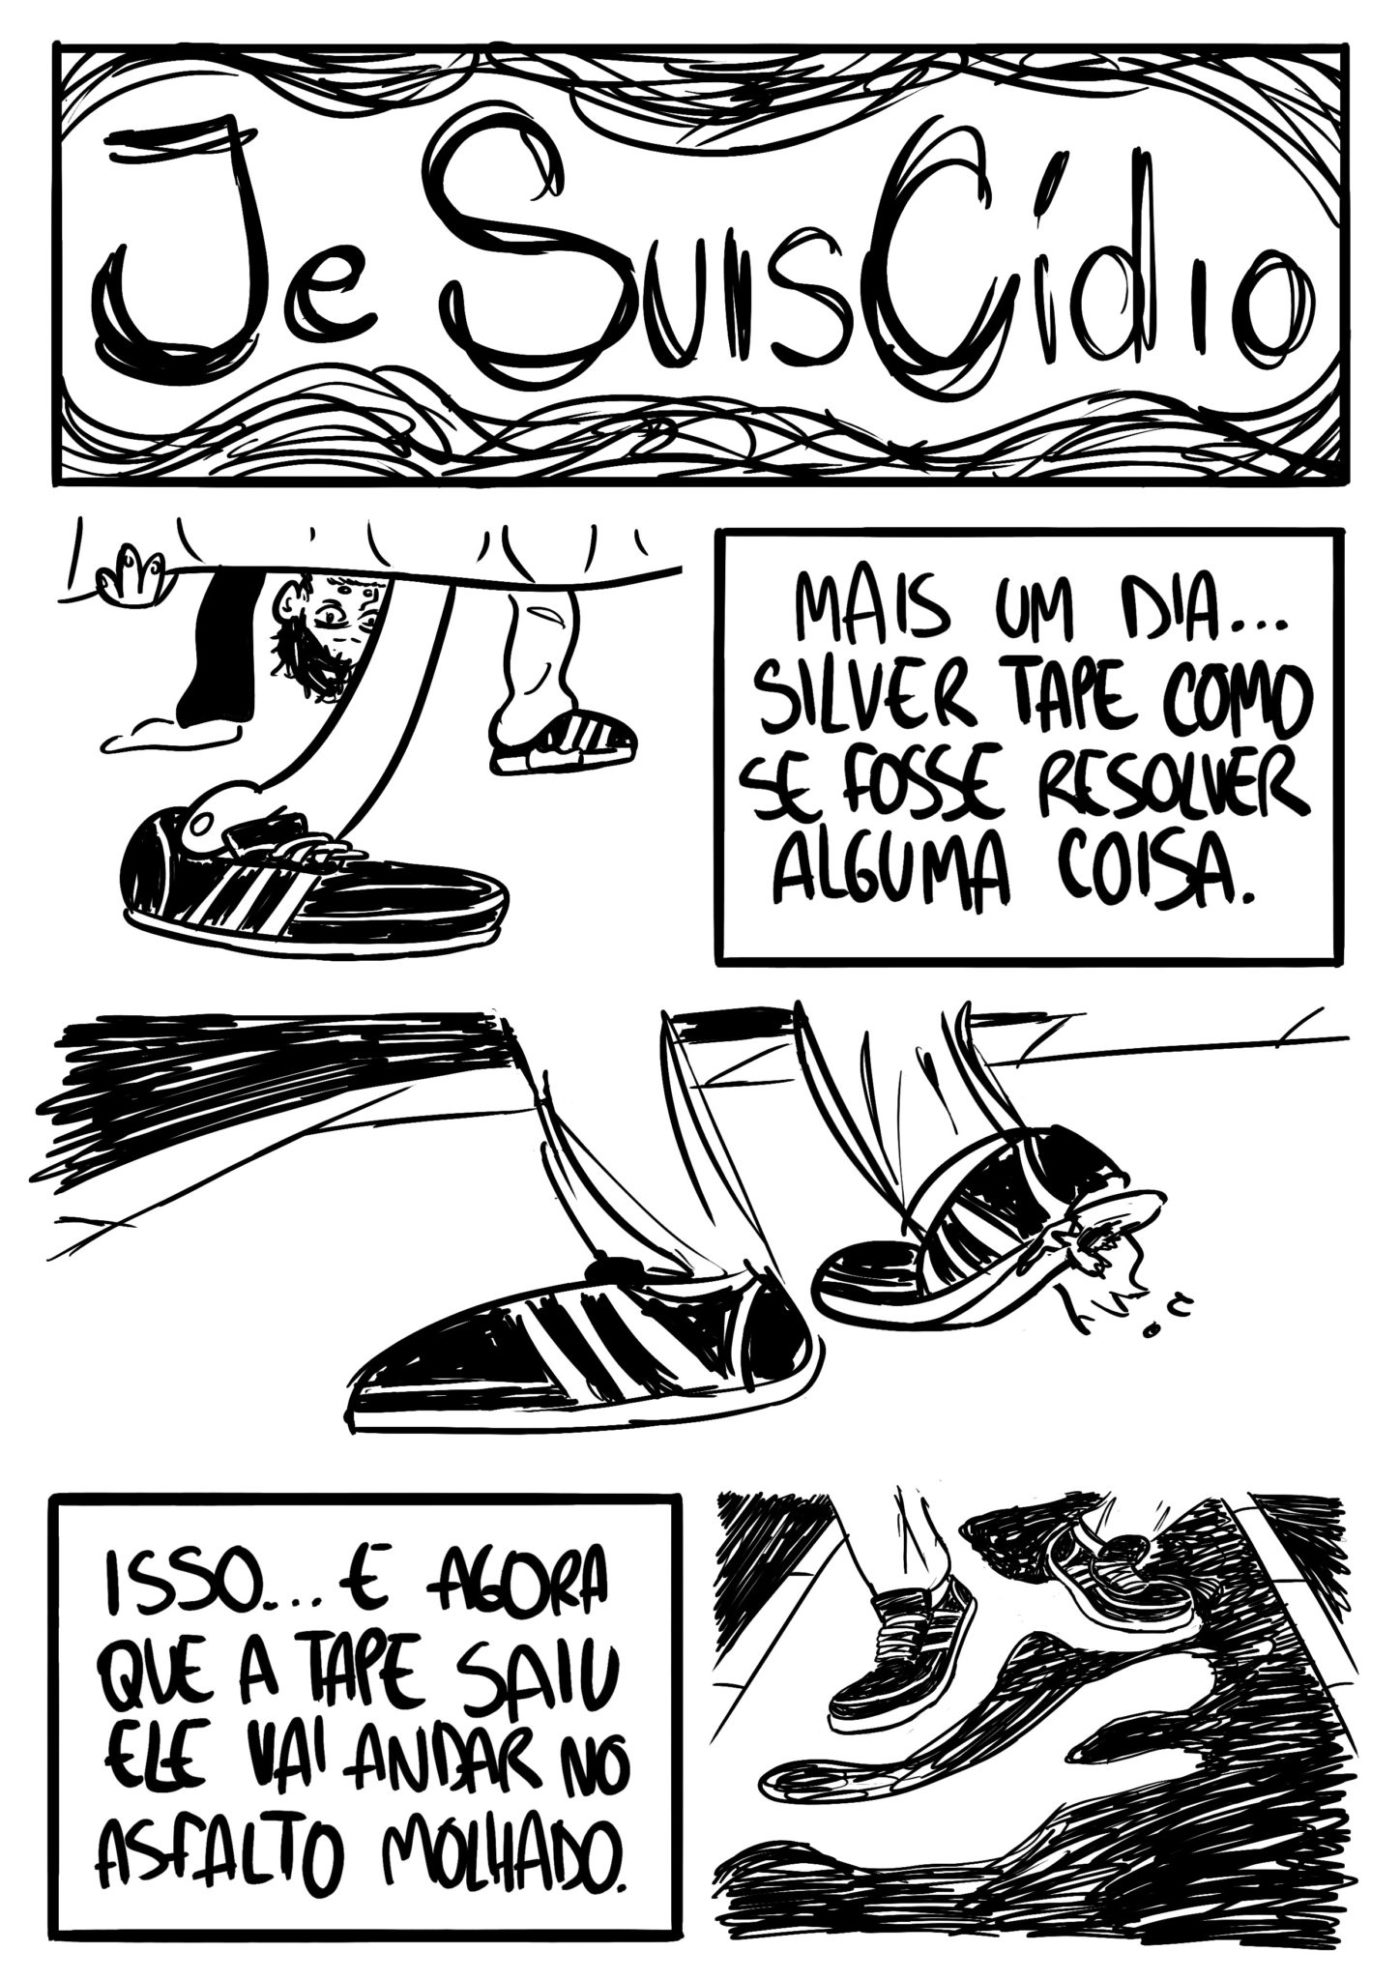 Je Suis Cídio #5, por João B. Godoi